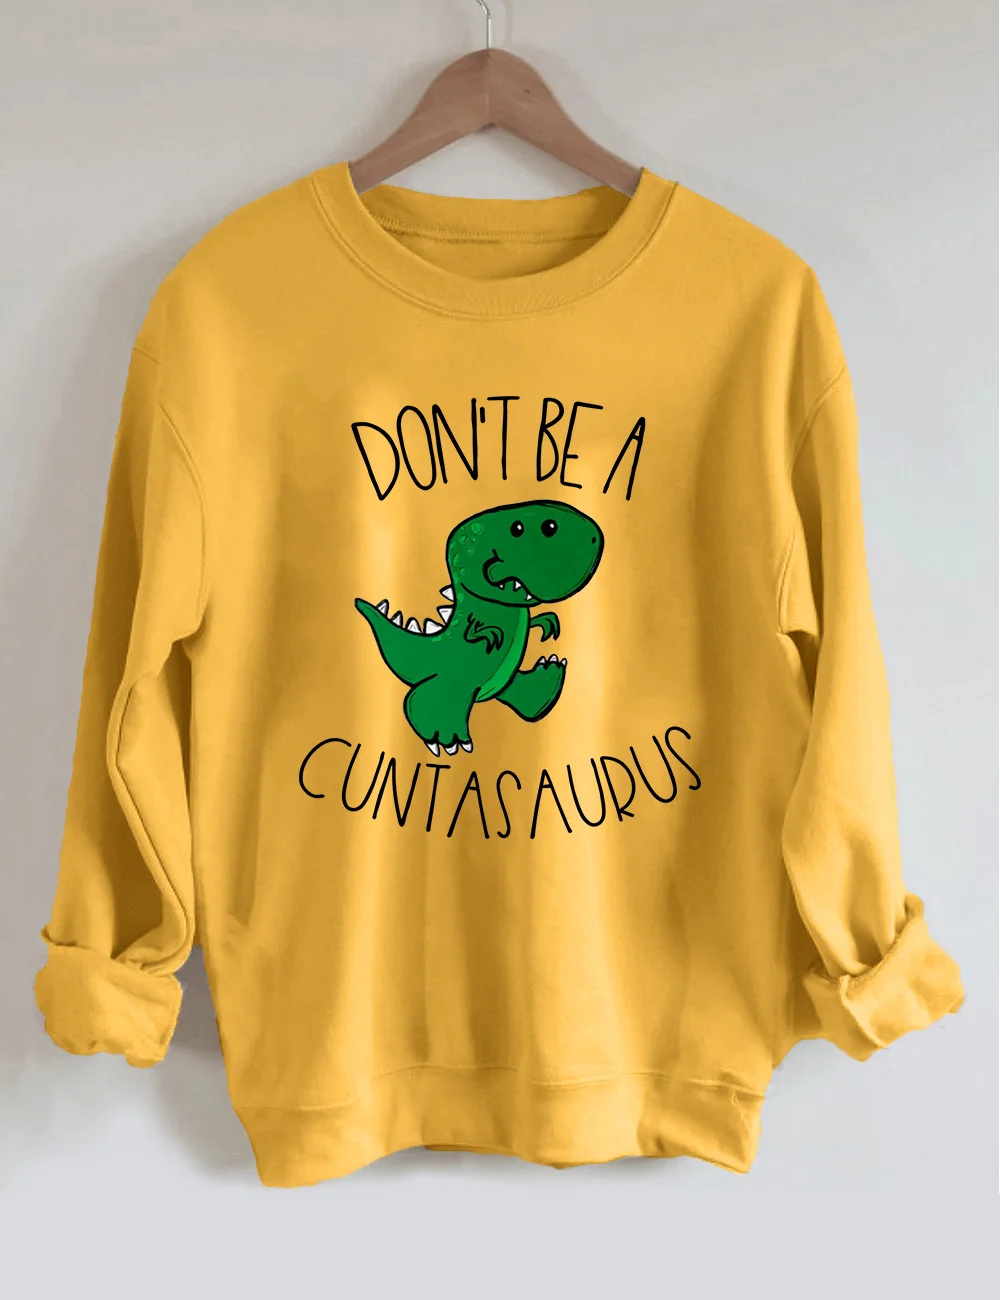 Don't Be A Cuntasaurus/Twatopotamus Sweatshirt